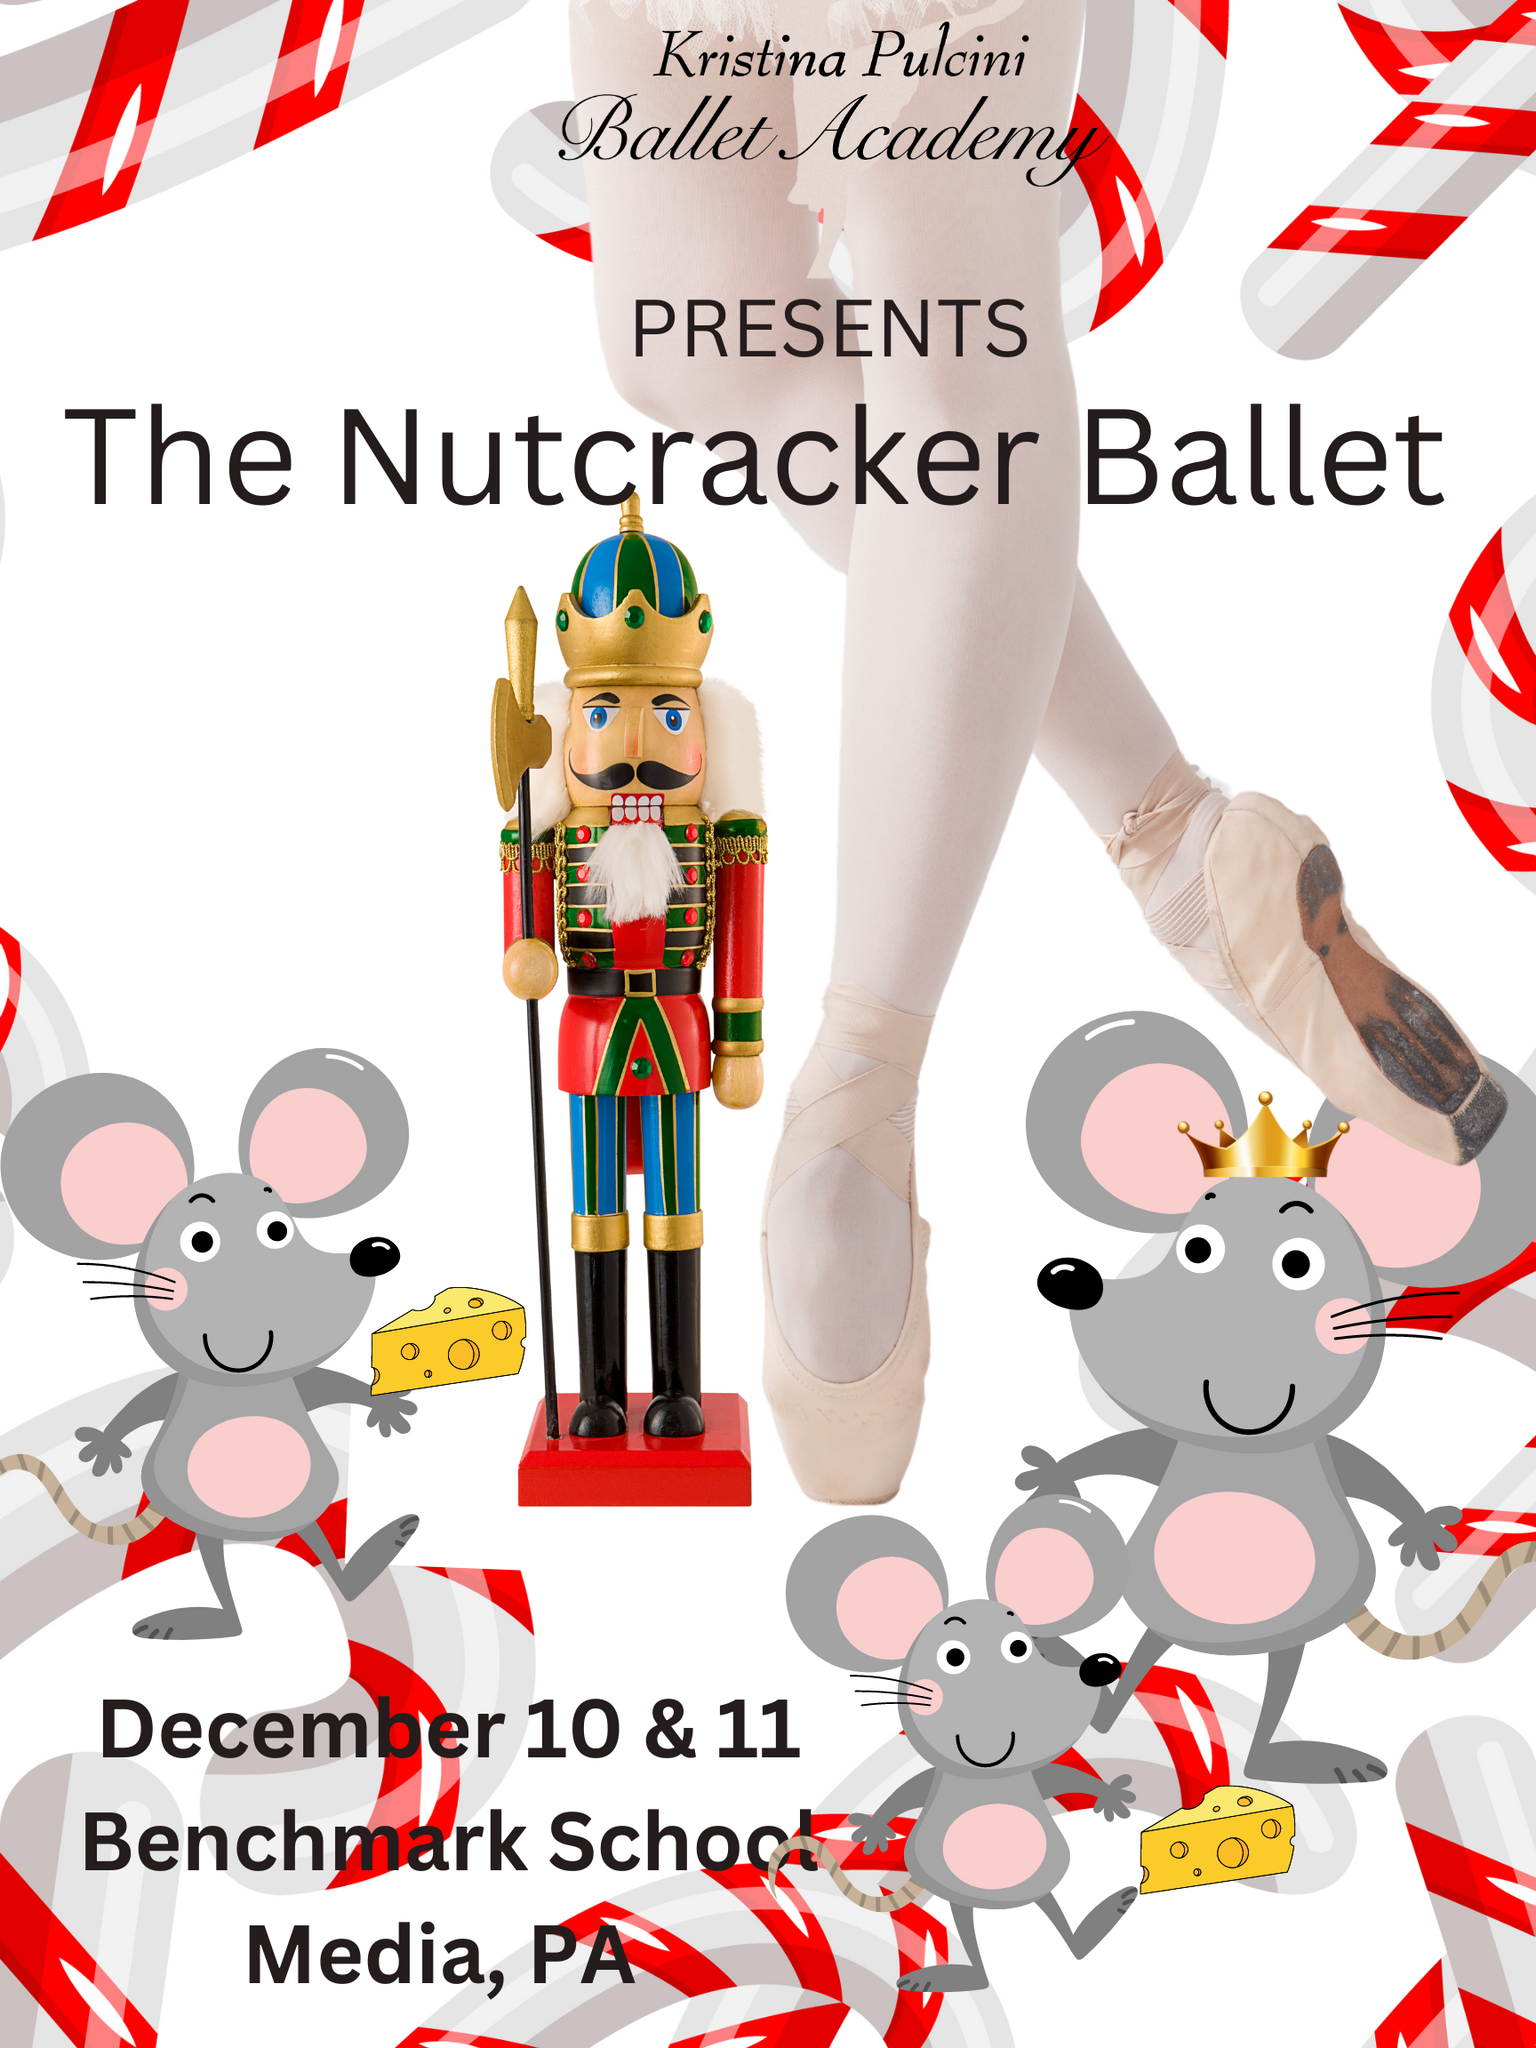 KP Ballet Academy presents "The Nutcracker" (2022) - Saturday, 12/10 @ 6:30pm show